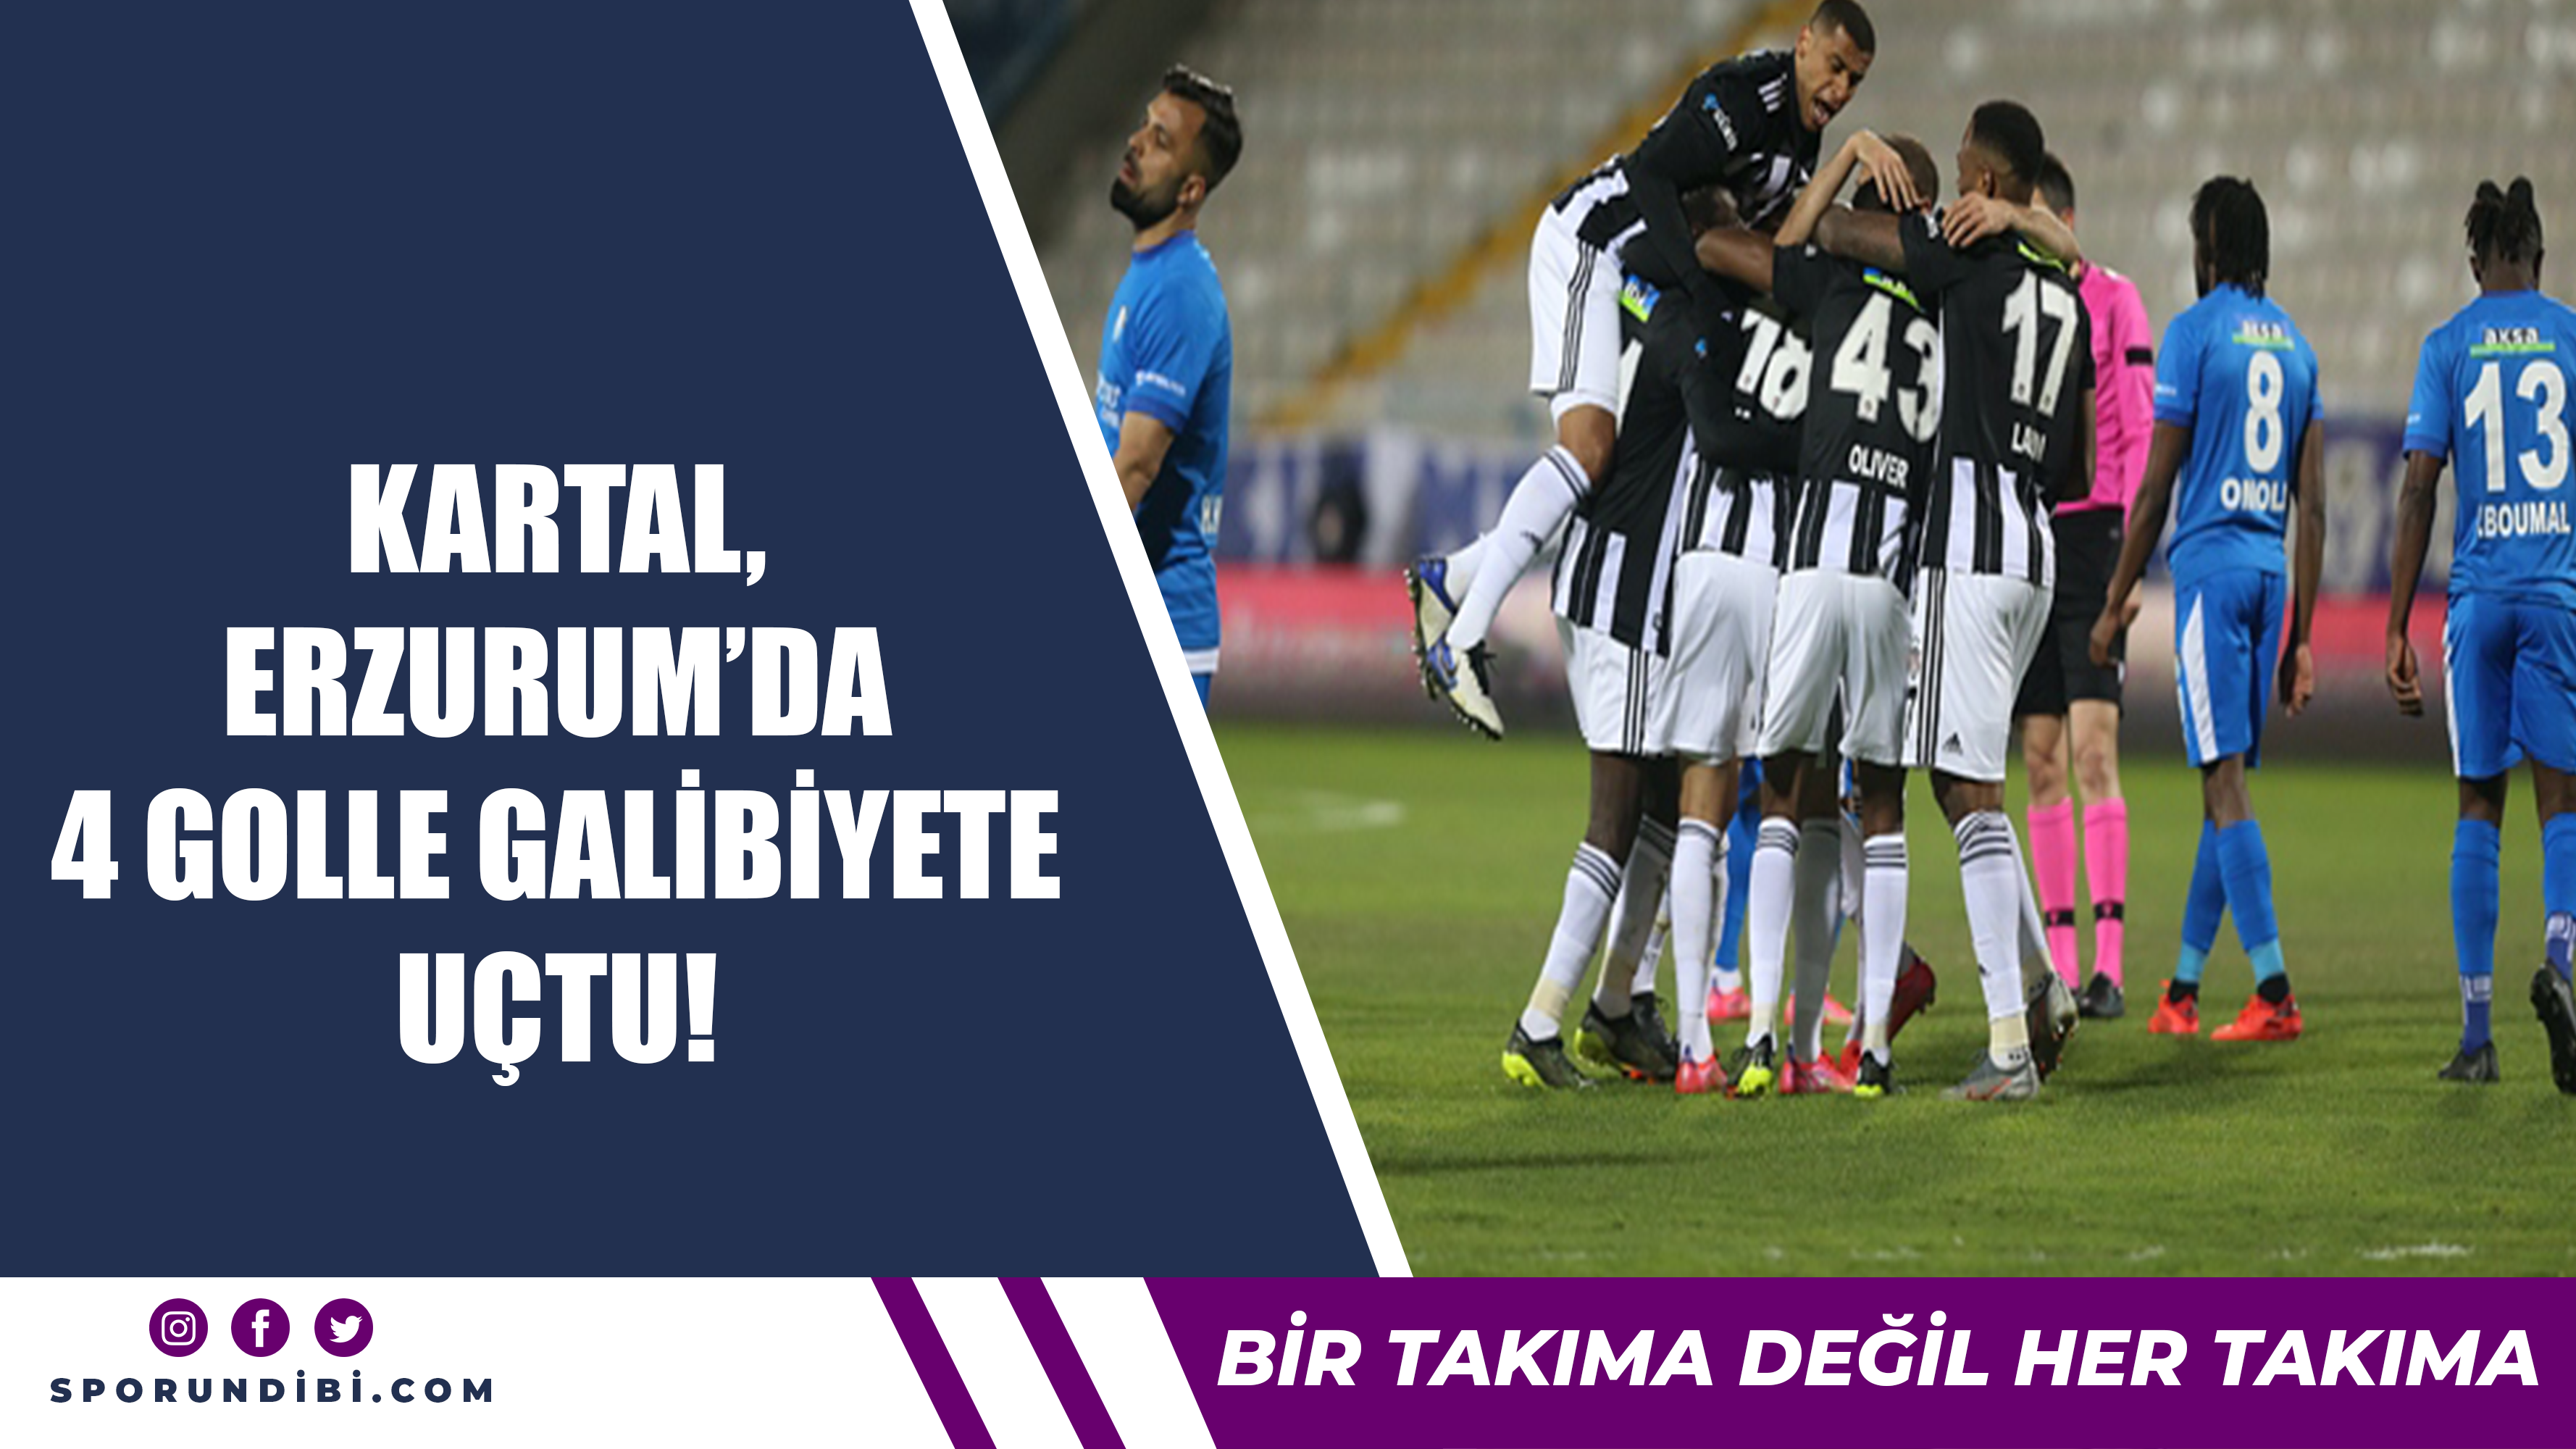 Kartal, Erzurum'da 4 golle galibiyete uçtu!